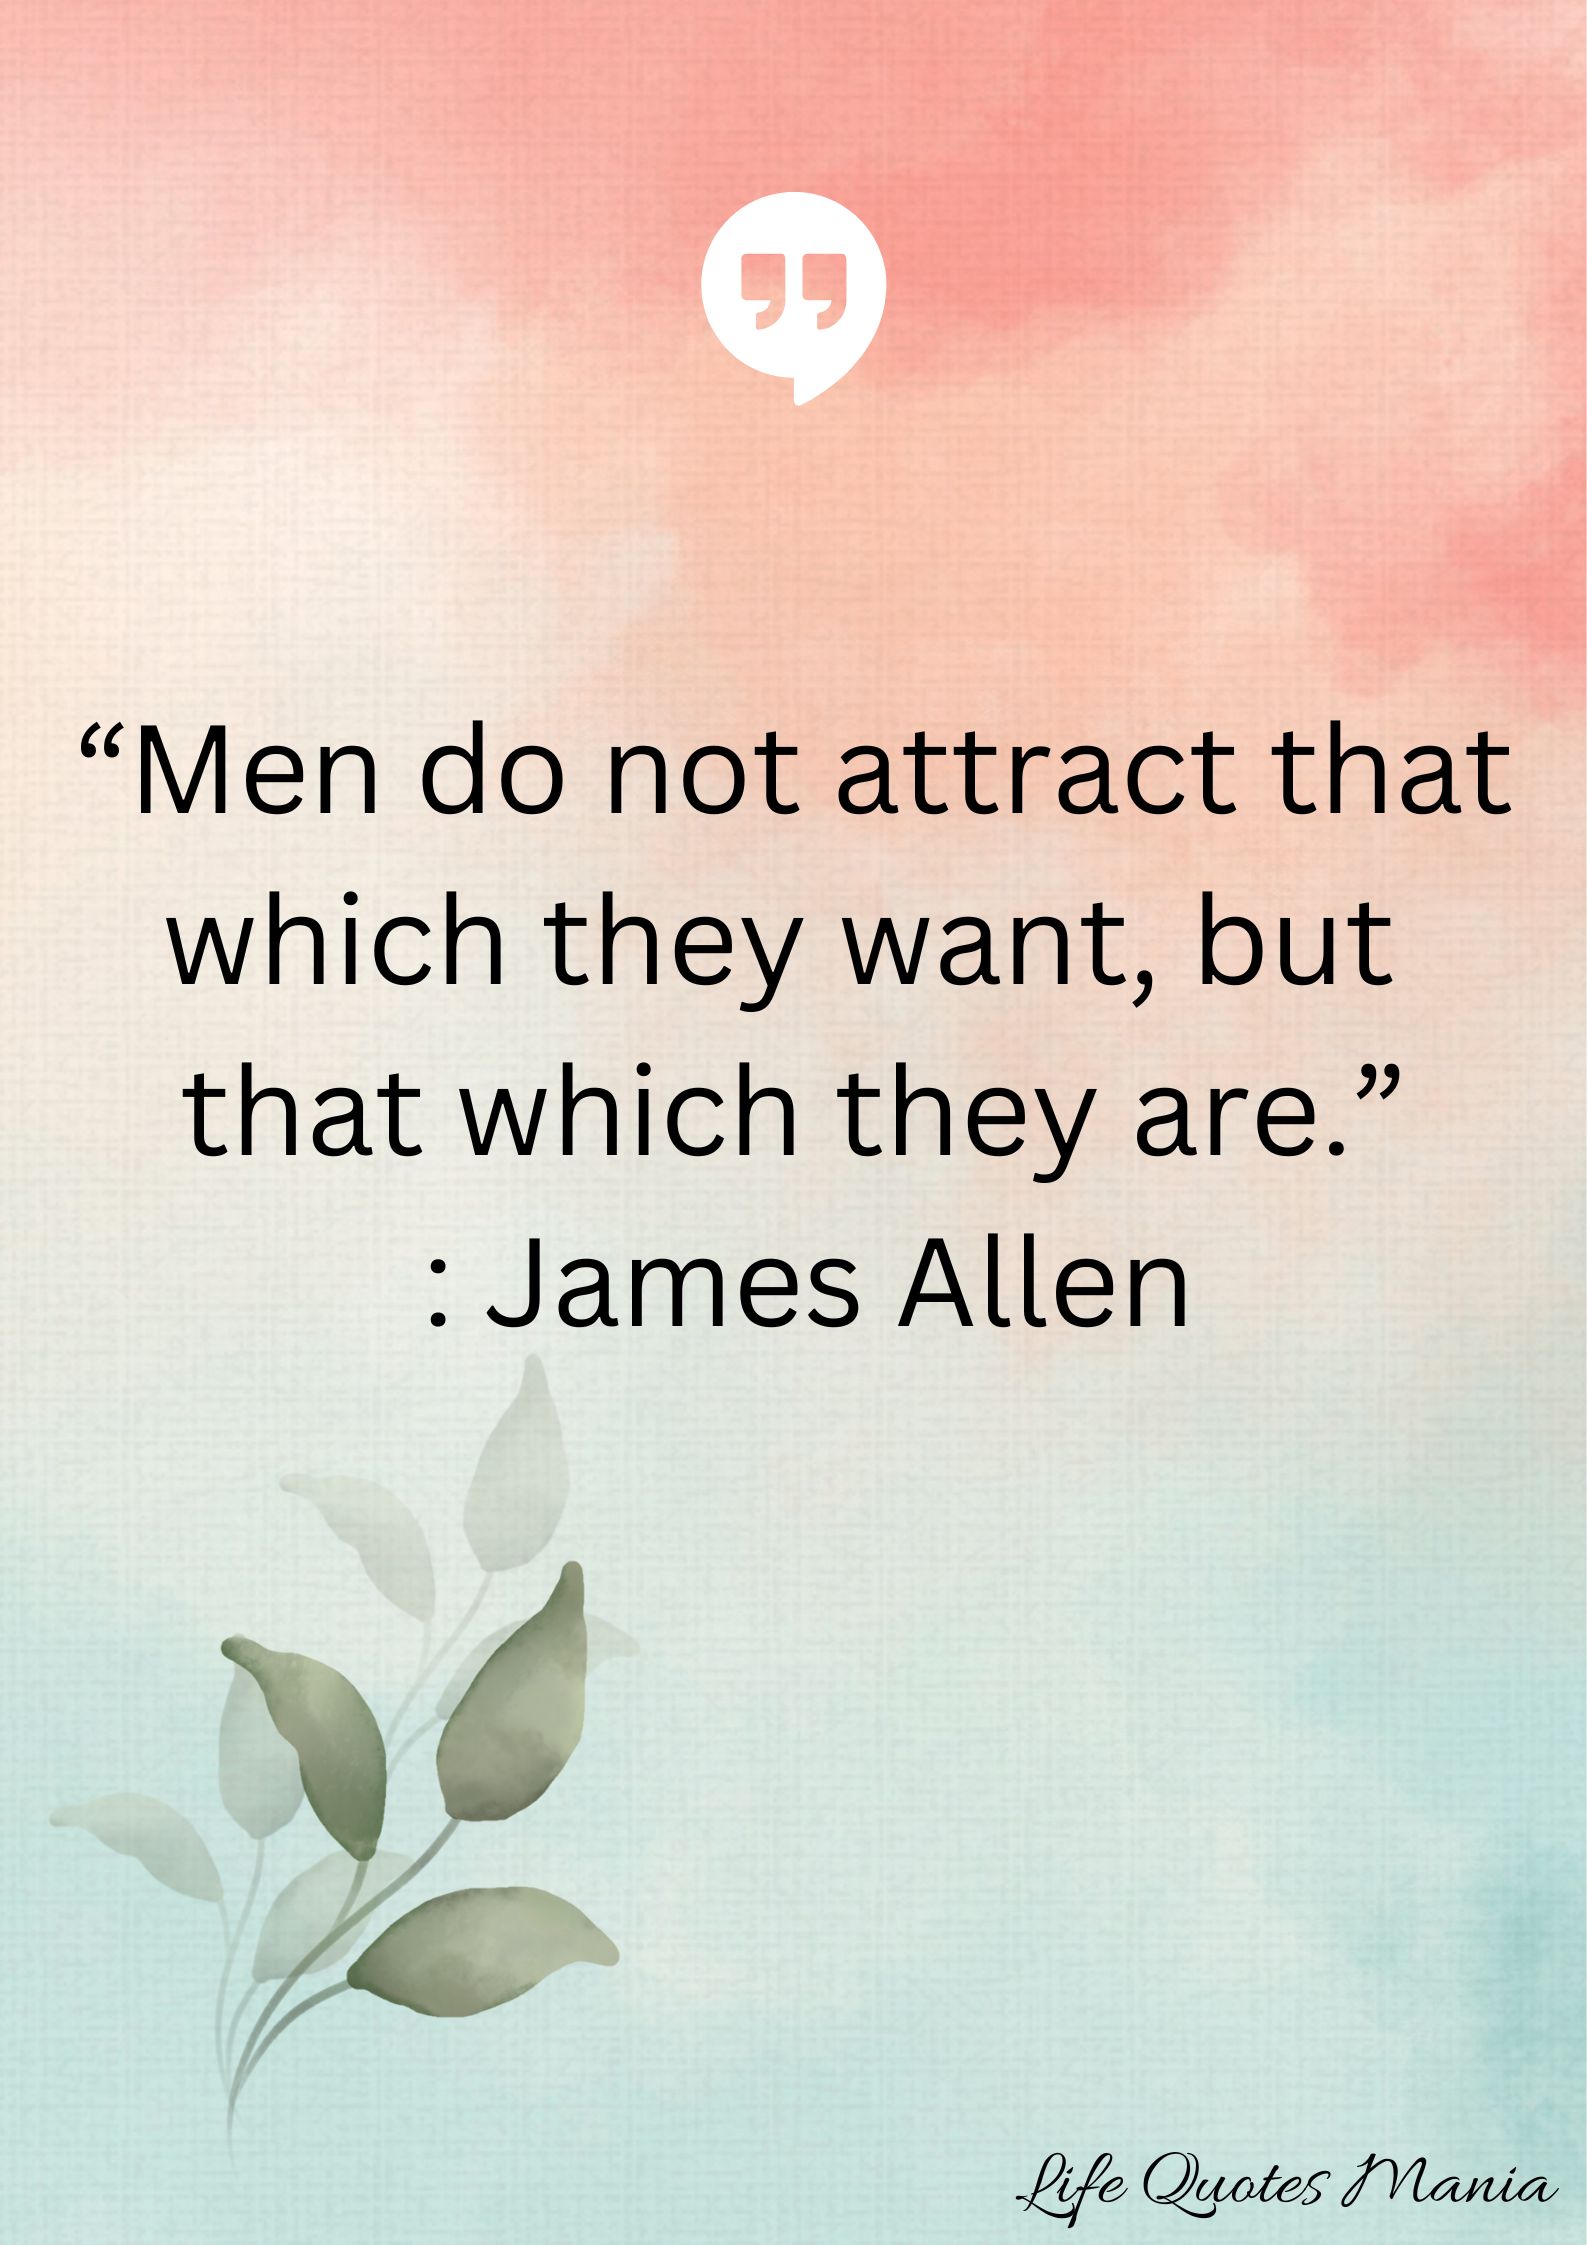 Attitude Quote - James Allen